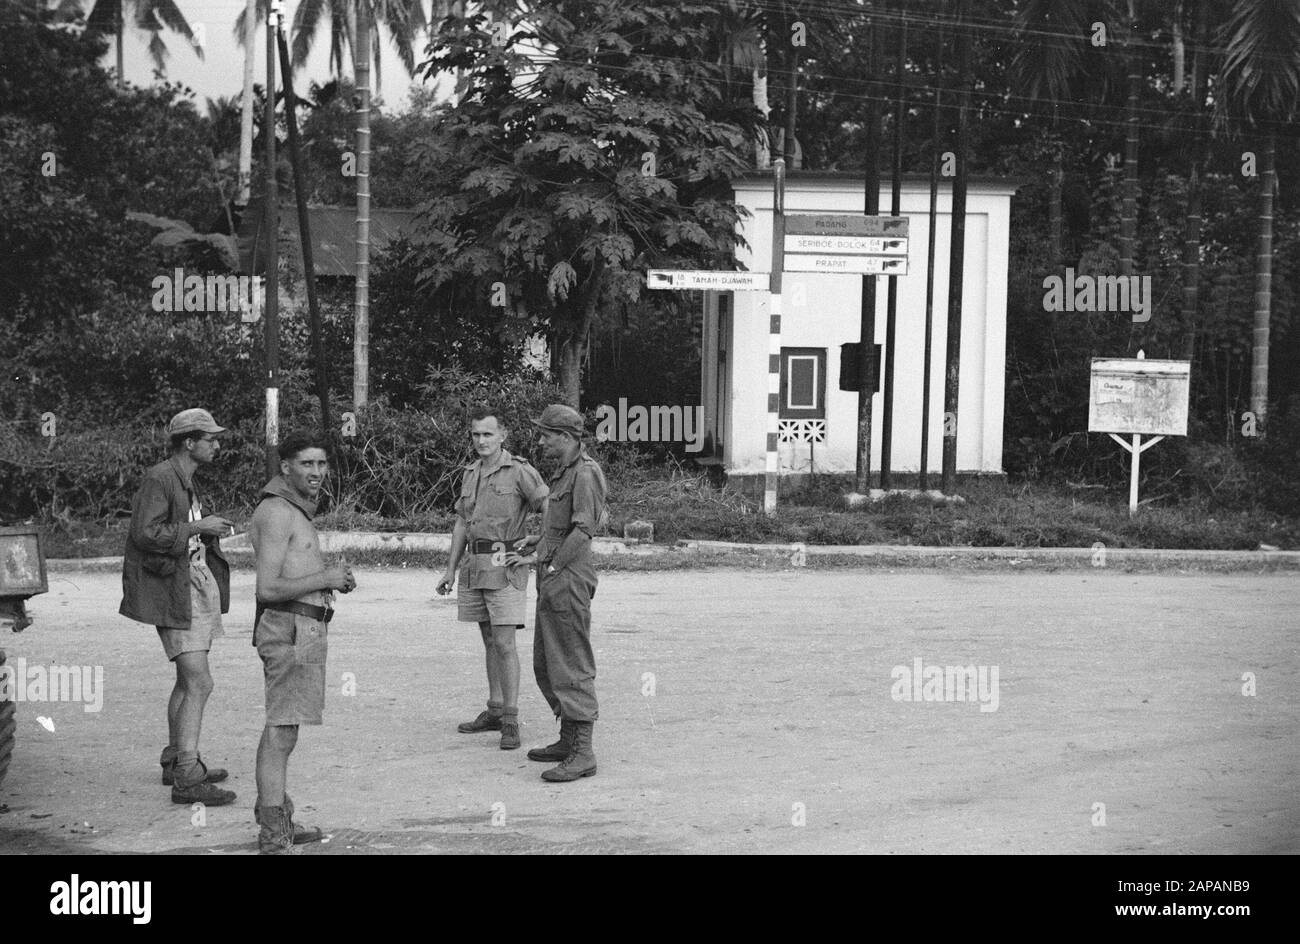 Loeboek Pakem en Baoengan Description: Occupation of Siantar. Dutch soldiers on the street. Behind them a signpost Date: 29 July 1948 Location: Indonesia, Dutch East Indies, Sumatra Stock Photo